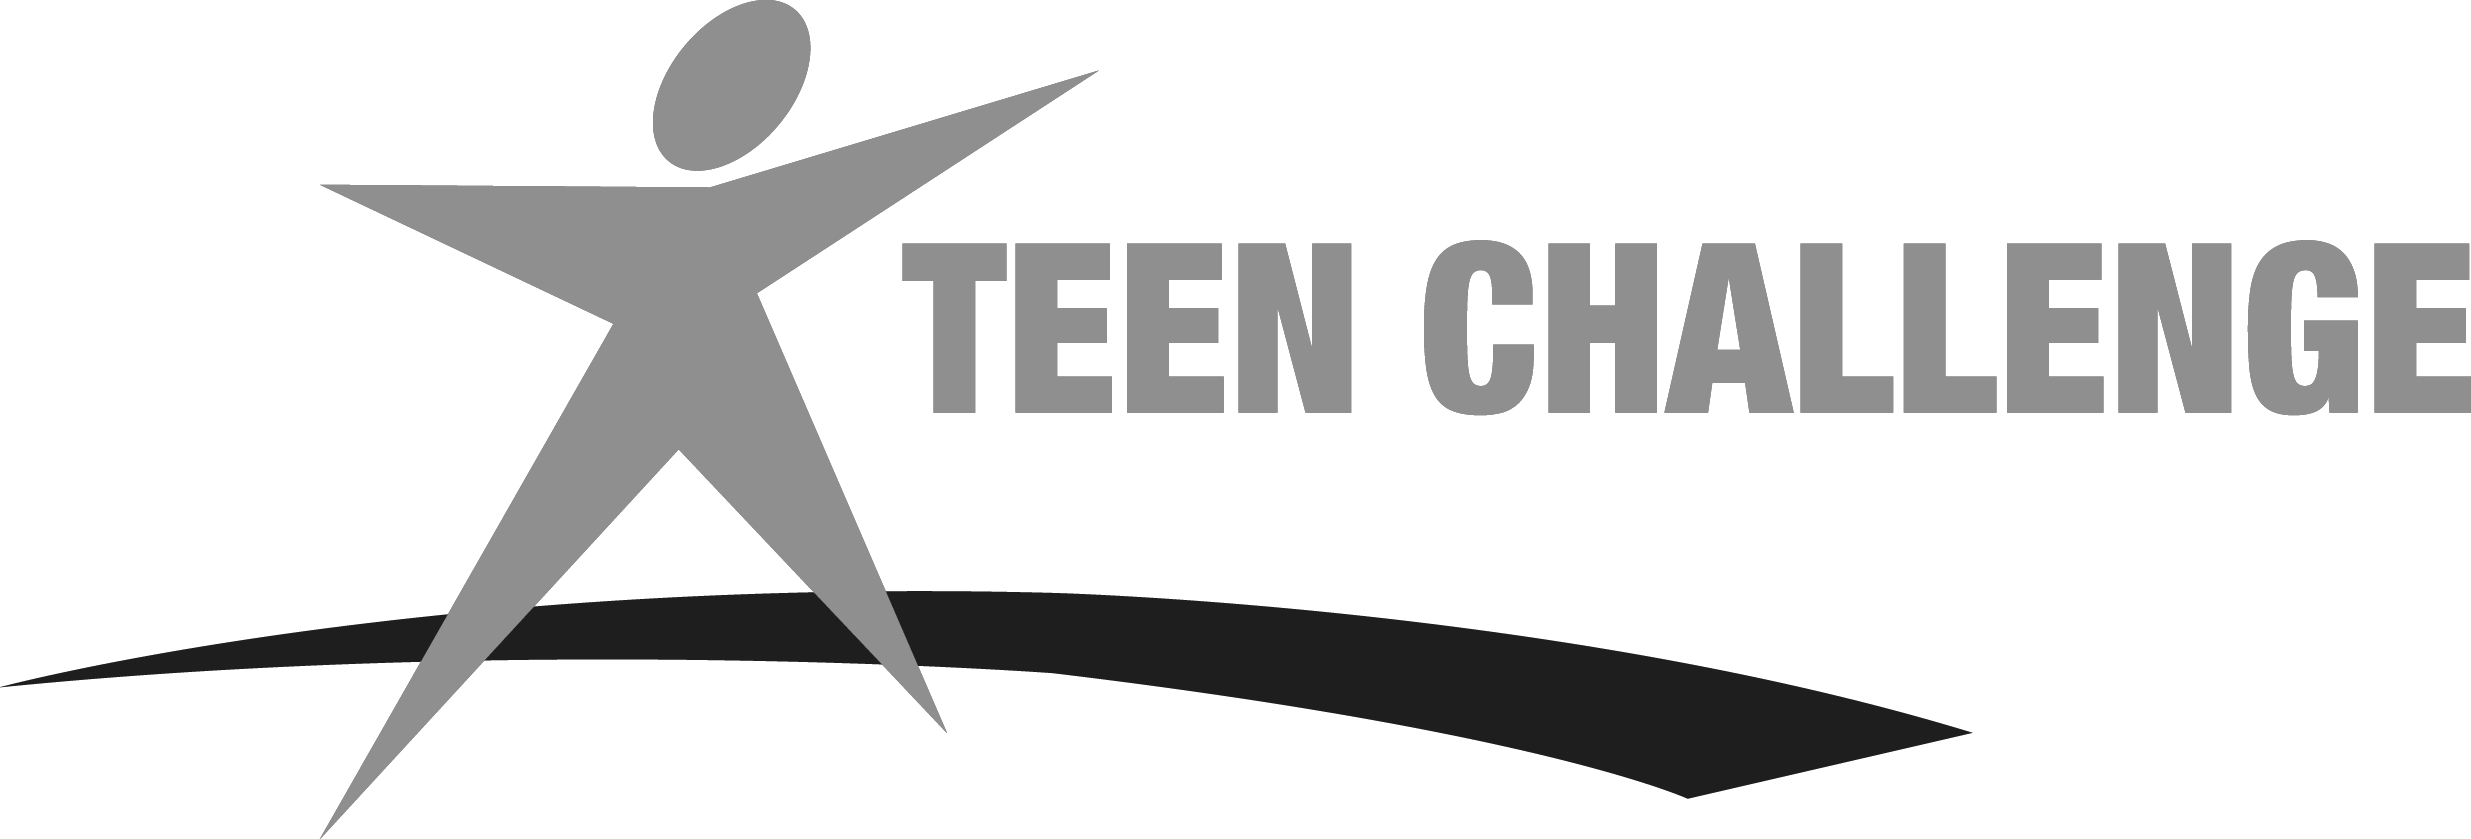 Teen Challenge Canada Logo